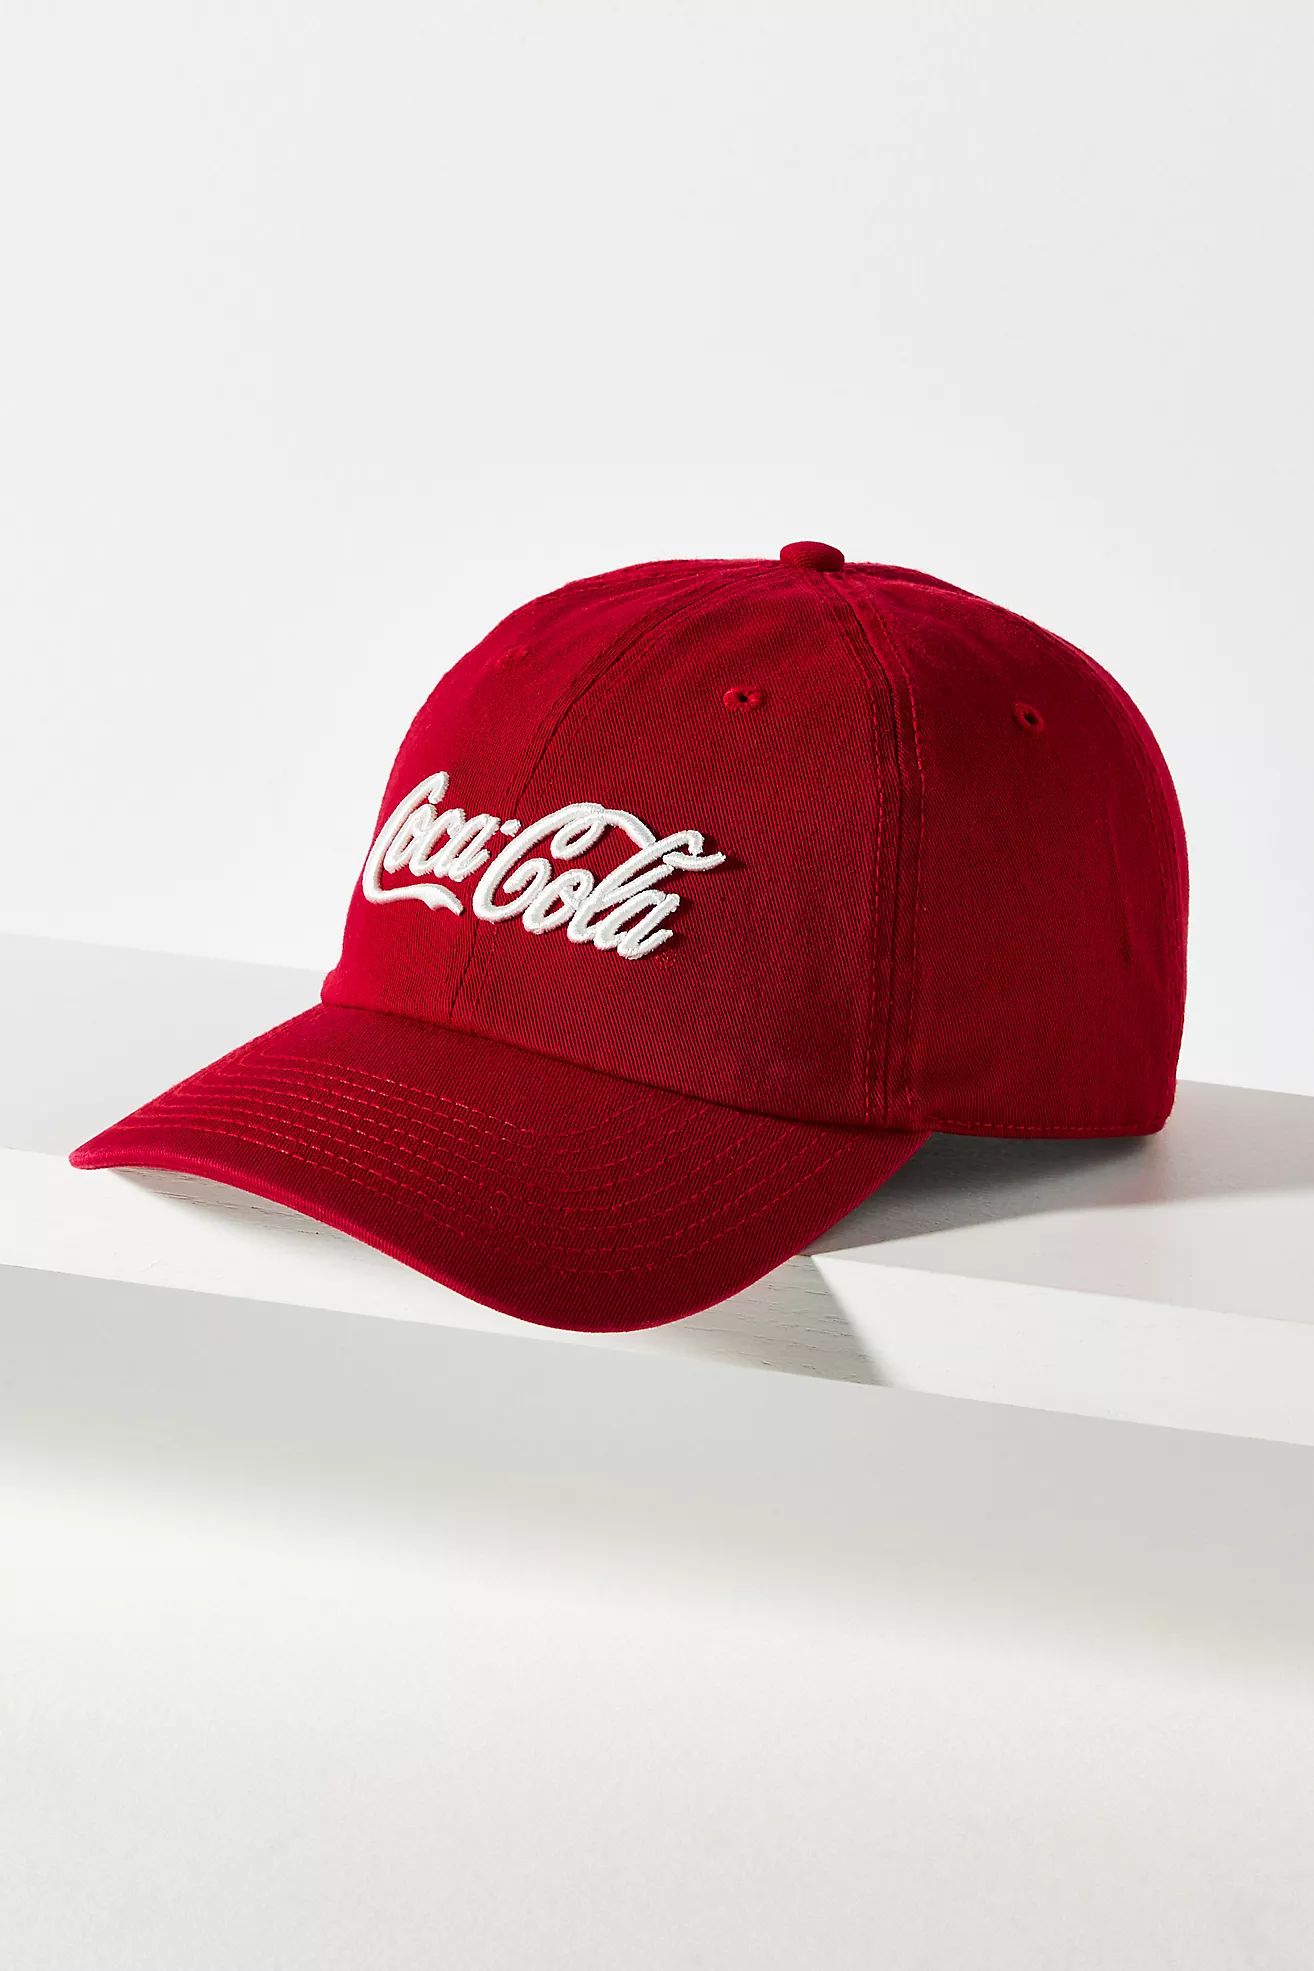 American Needle Coca-Cola Baseball Cap | Anthropologie (US)